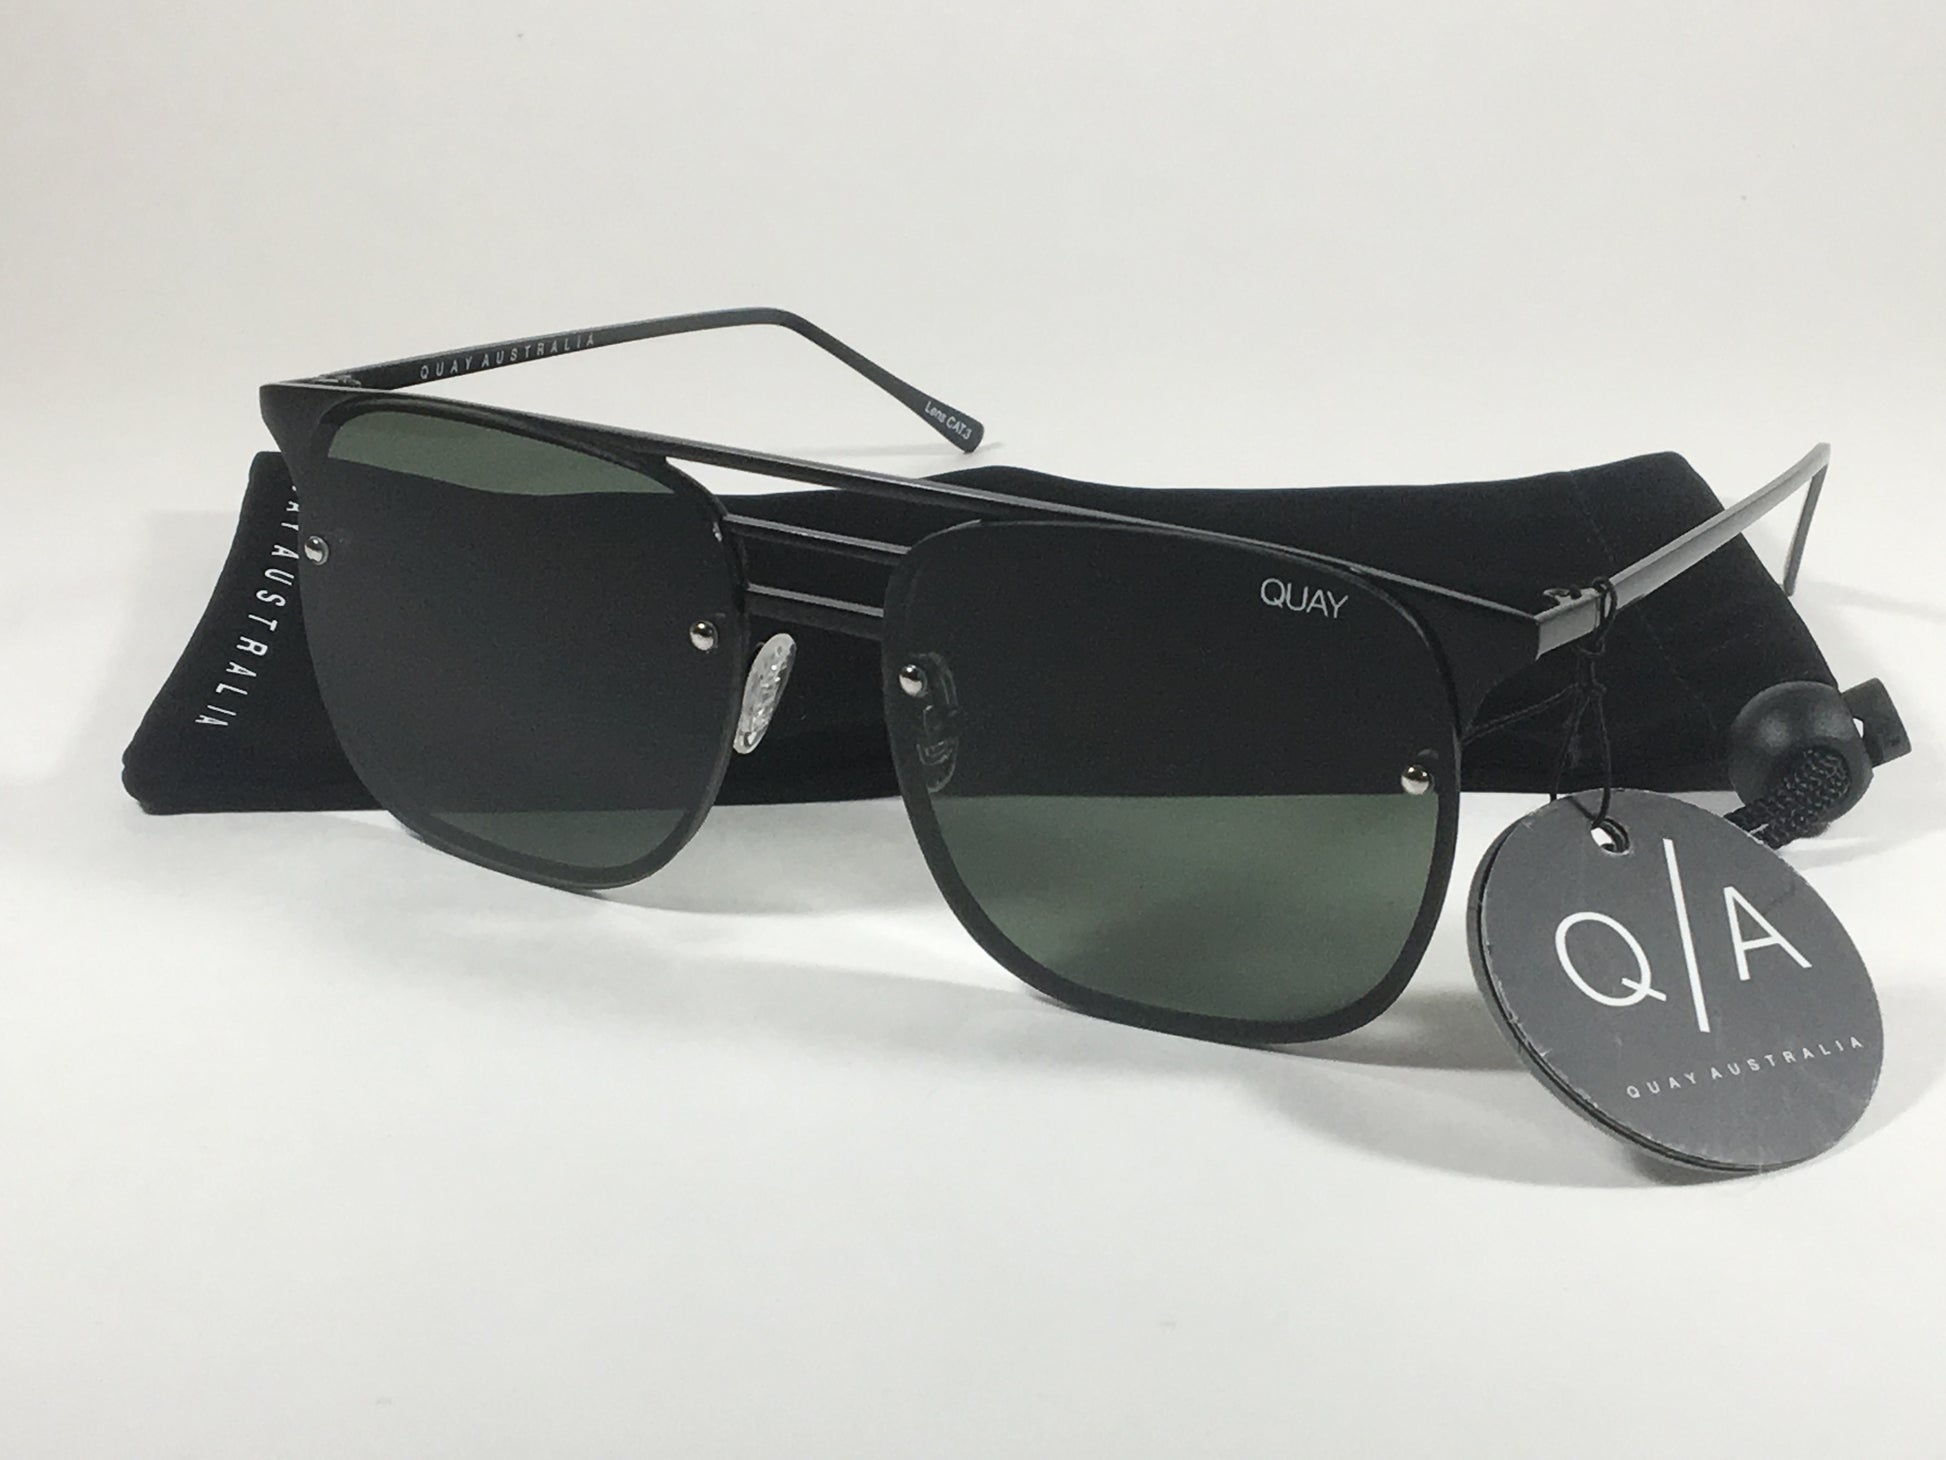 Quay Australia Hendrix Sunglasses Retro Brow Bar Matte Black Metal Green Gray Solid Lens Qm000188 Blk/grn - Sunglasses